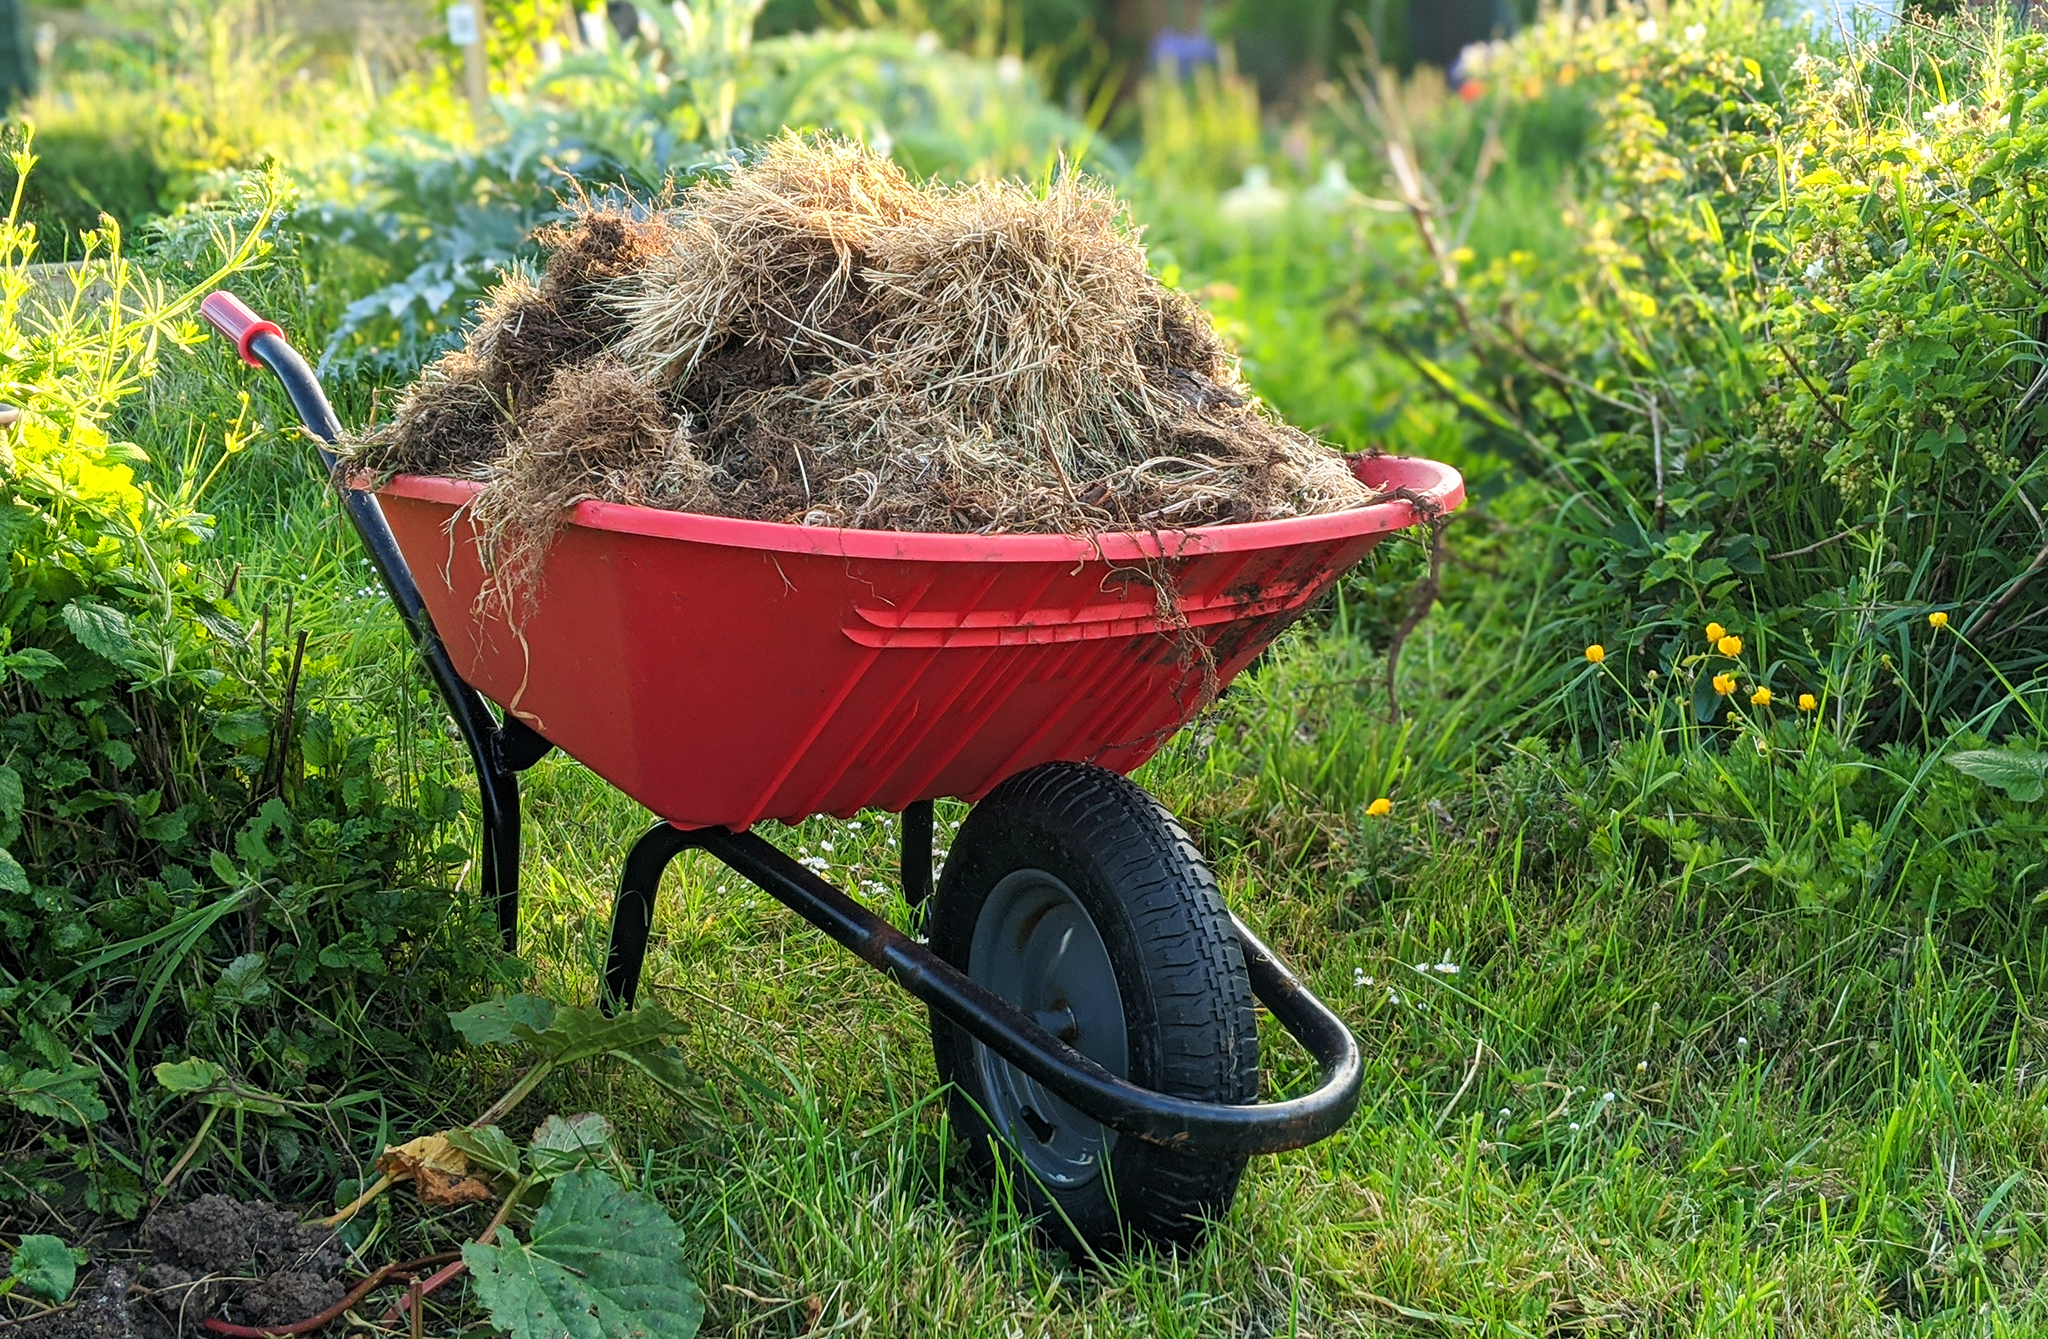 A red wheelbarrow on a lawn, the wheelbarrow is full of grass cuttings